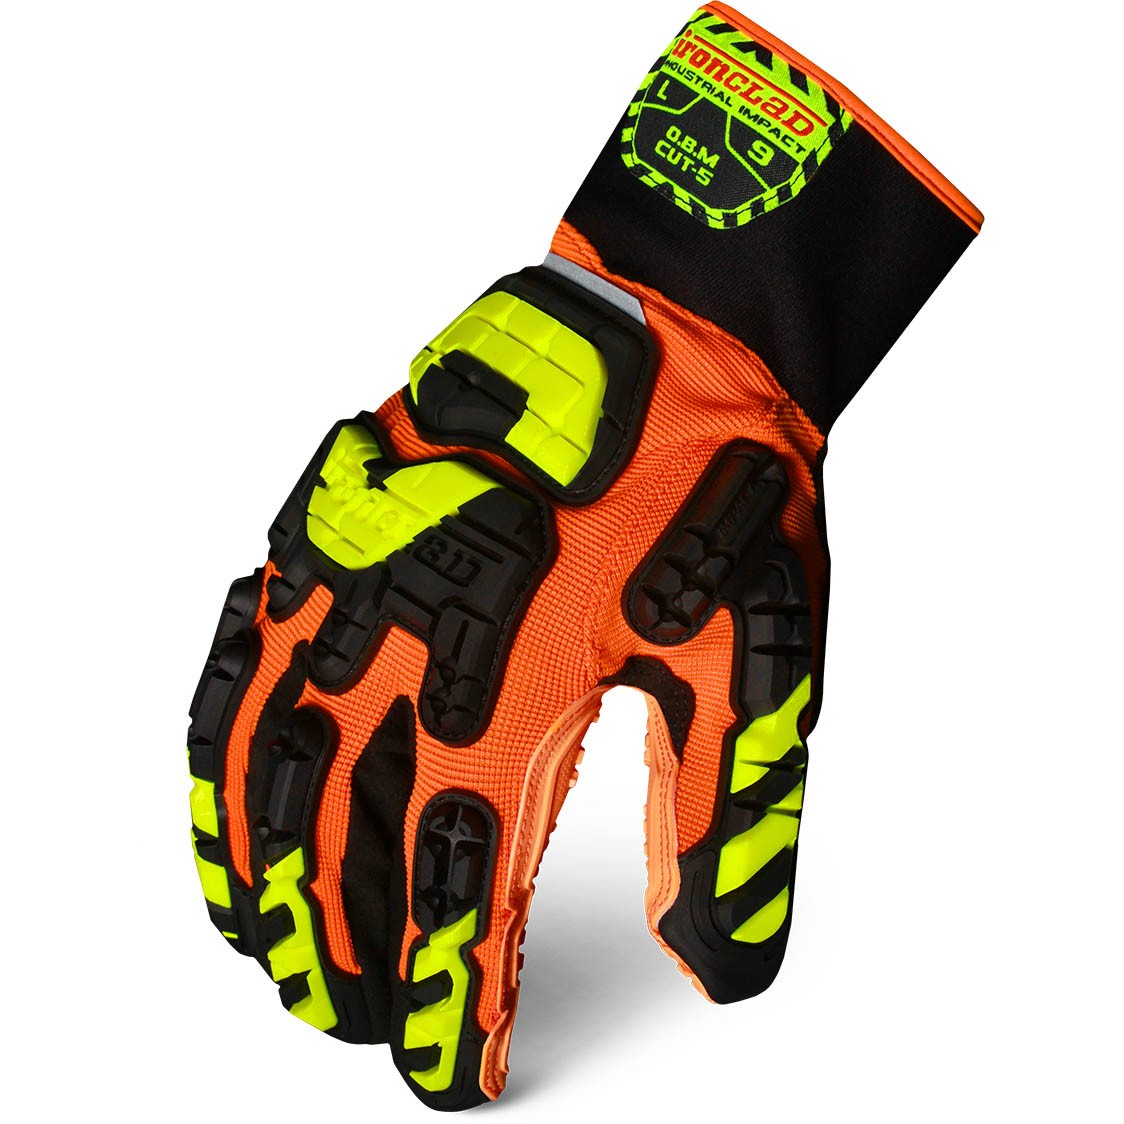 Ironclad VIB-OBMC5 Vibram Oil-Based Mud Cut Resistant Palm Gloves